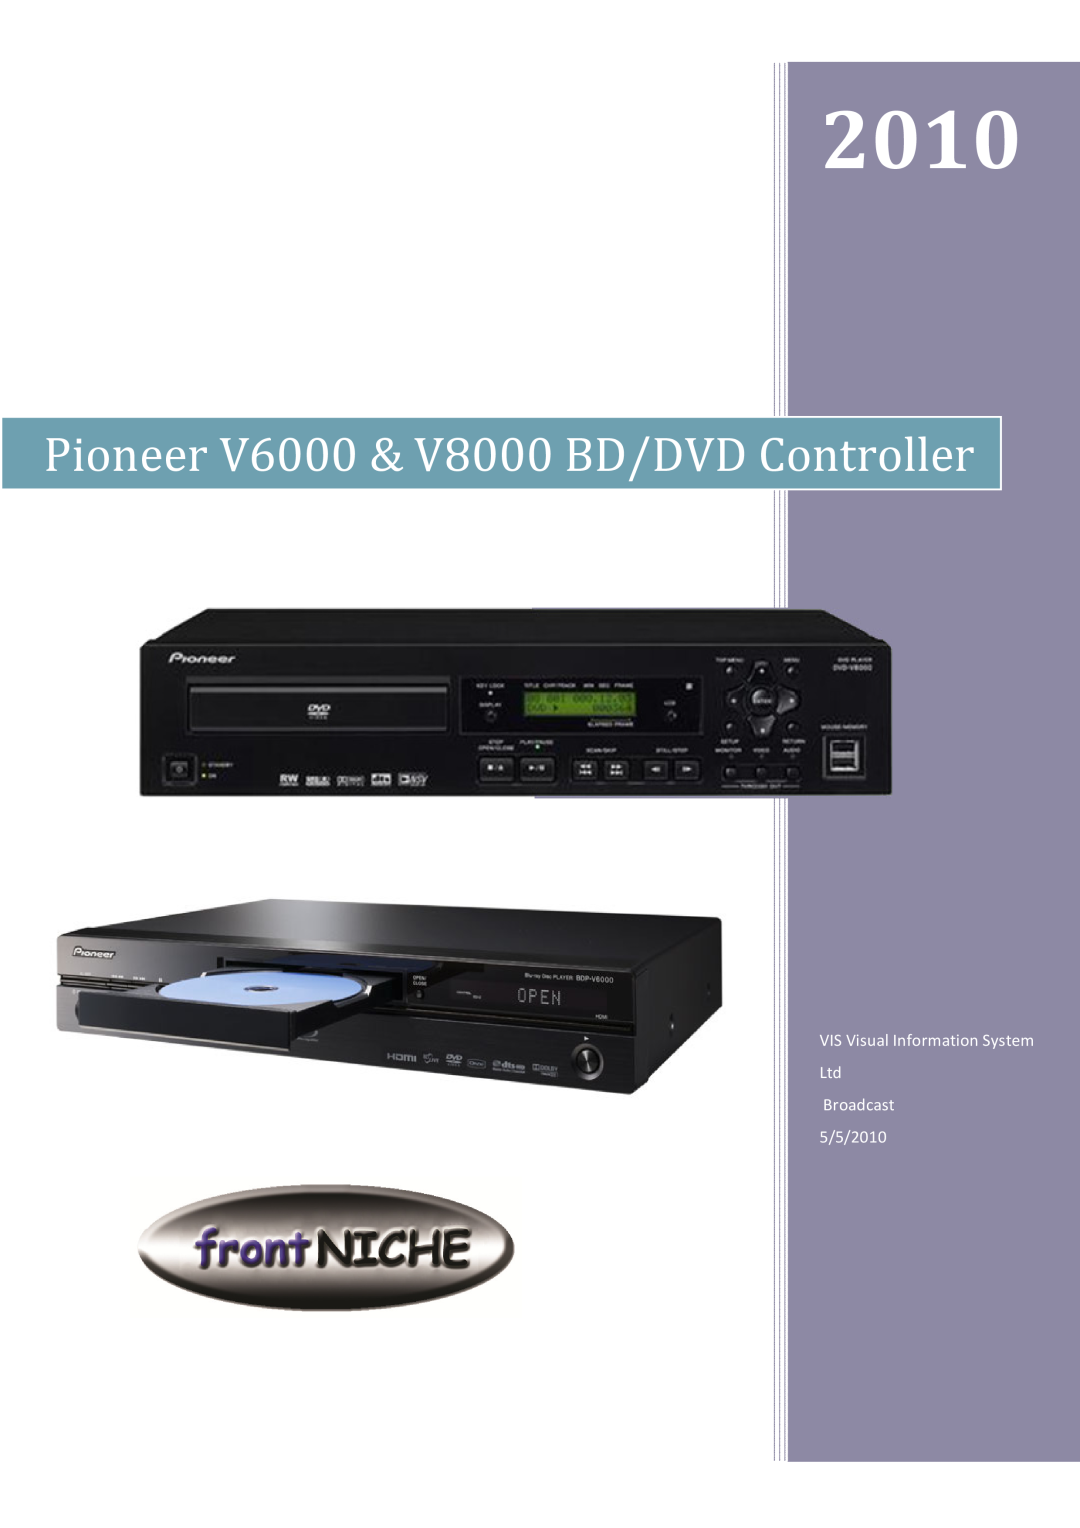 Pioneer manual VIS Visual Information System, Broadcast 5/5/2010, Pioneer V6000 & V8000 BD/DVD Controller 